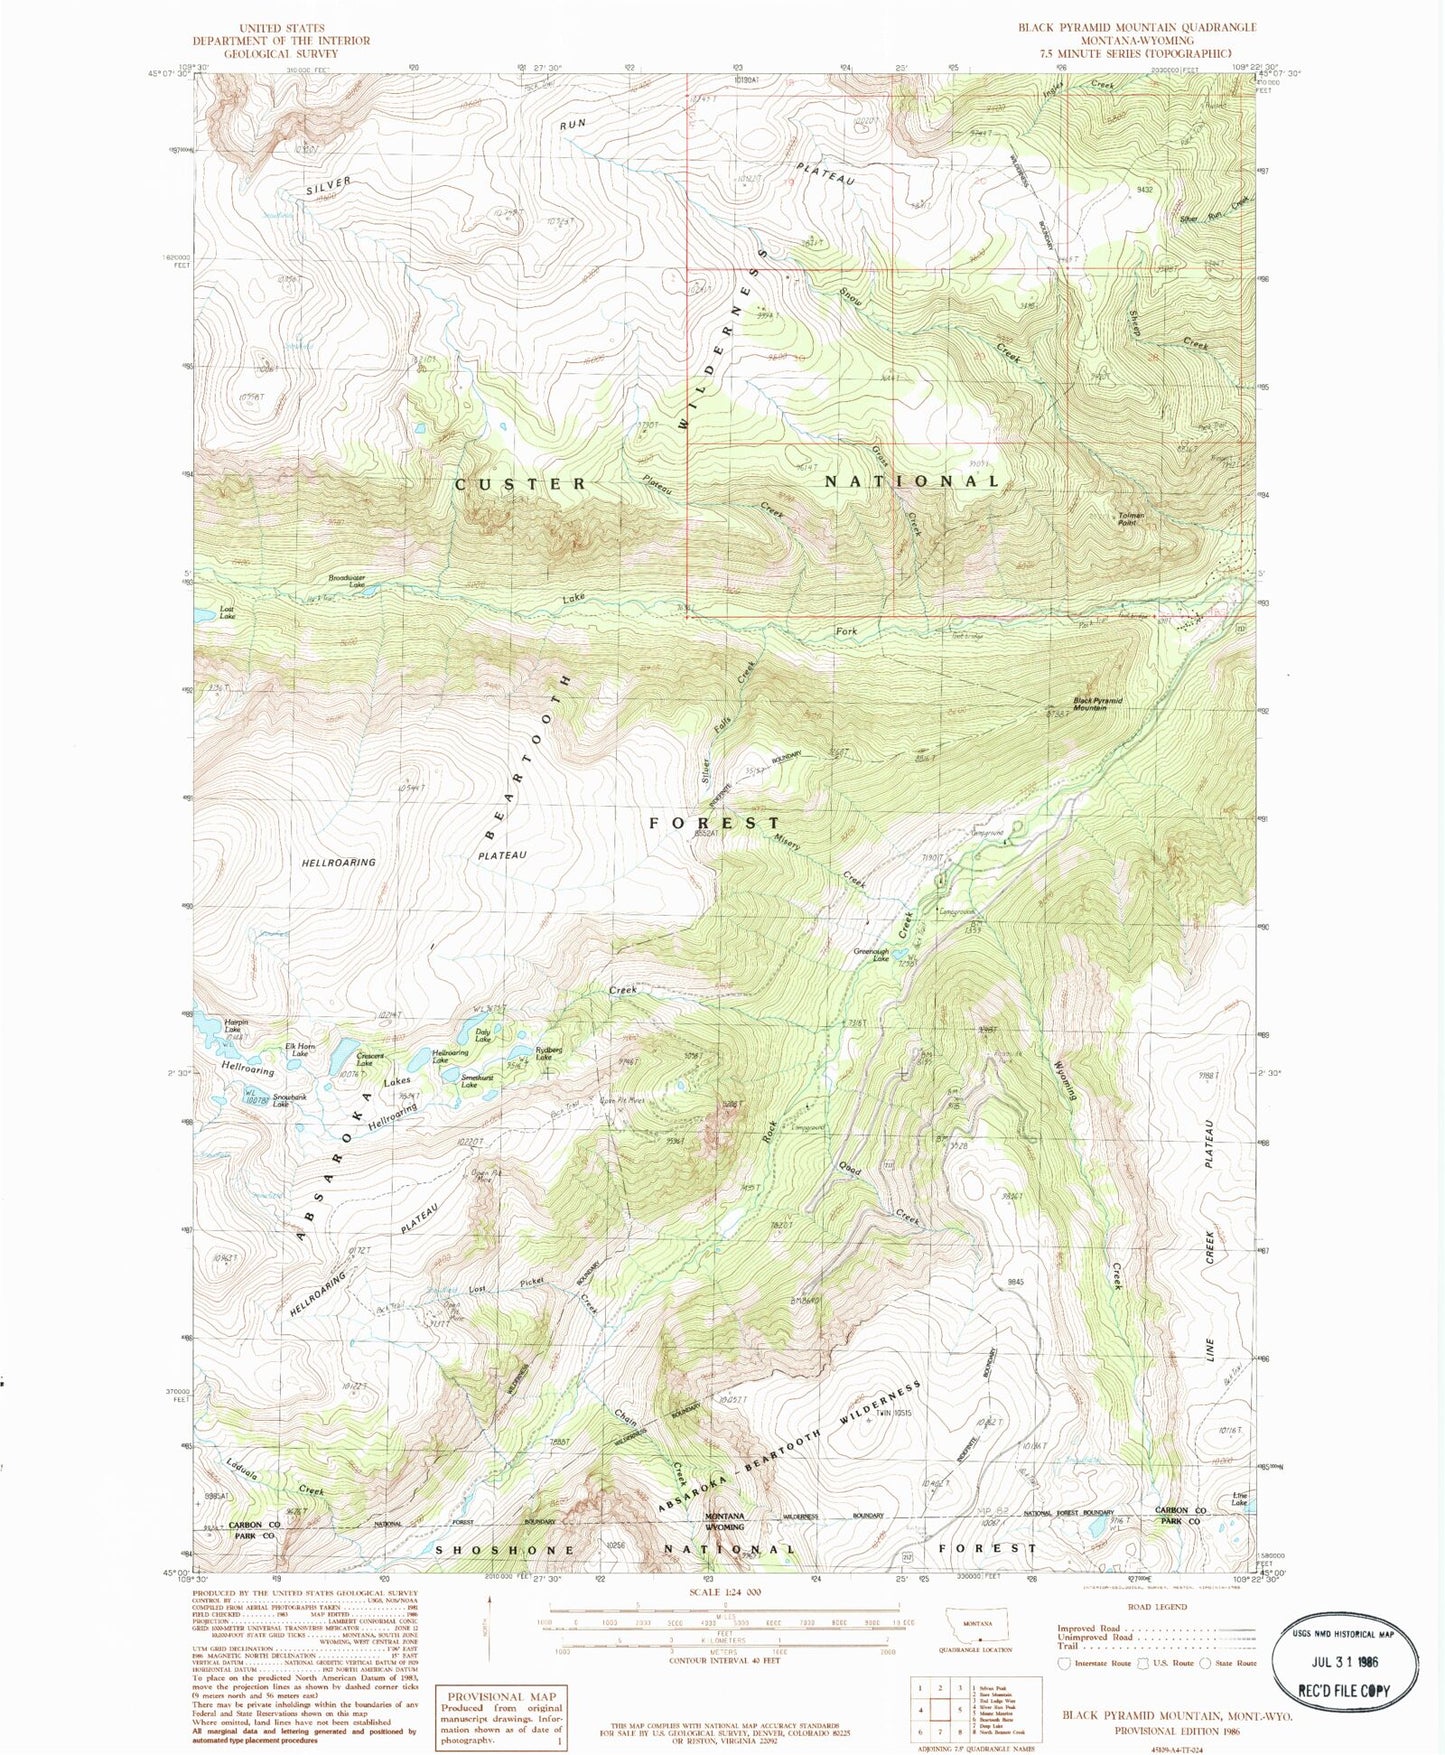 USGS Classic Black Pyramid Mountain Montana 7.5'x7.5' Topo Map Image